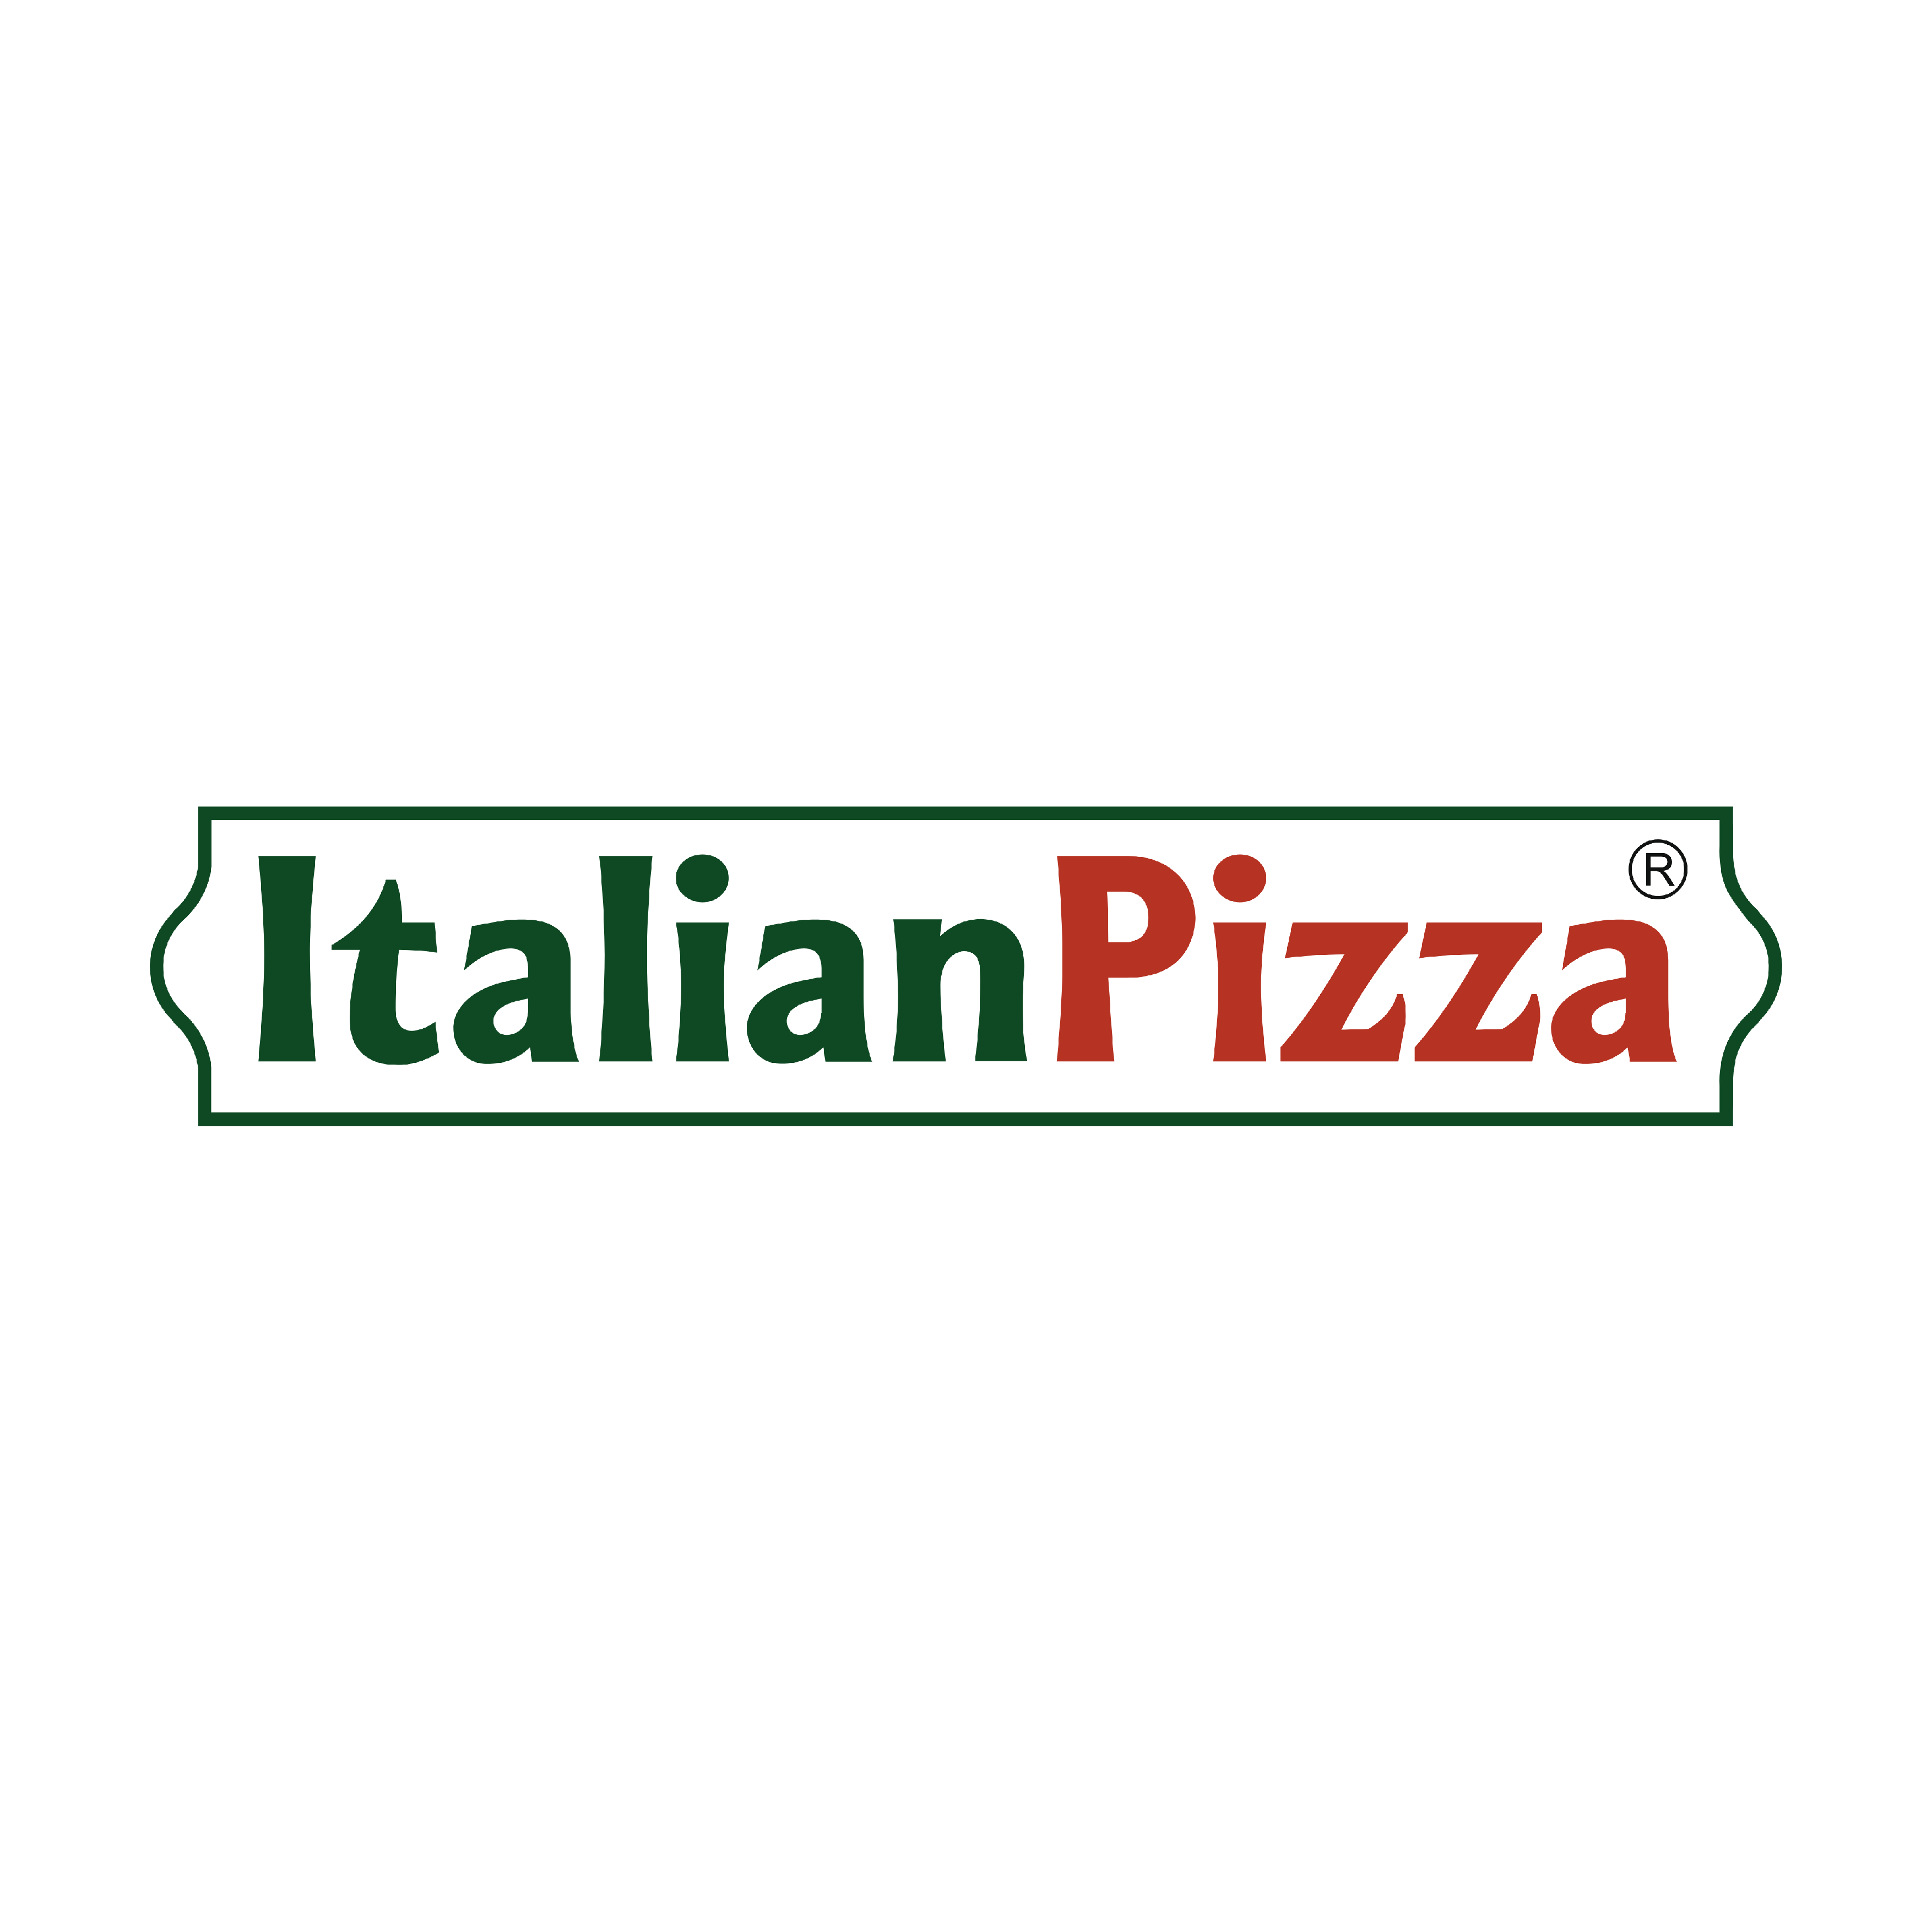 Италиан сысерть. Логотип пиццерии. Италиан пицца. Pizza логотип. Italian pizza лого.